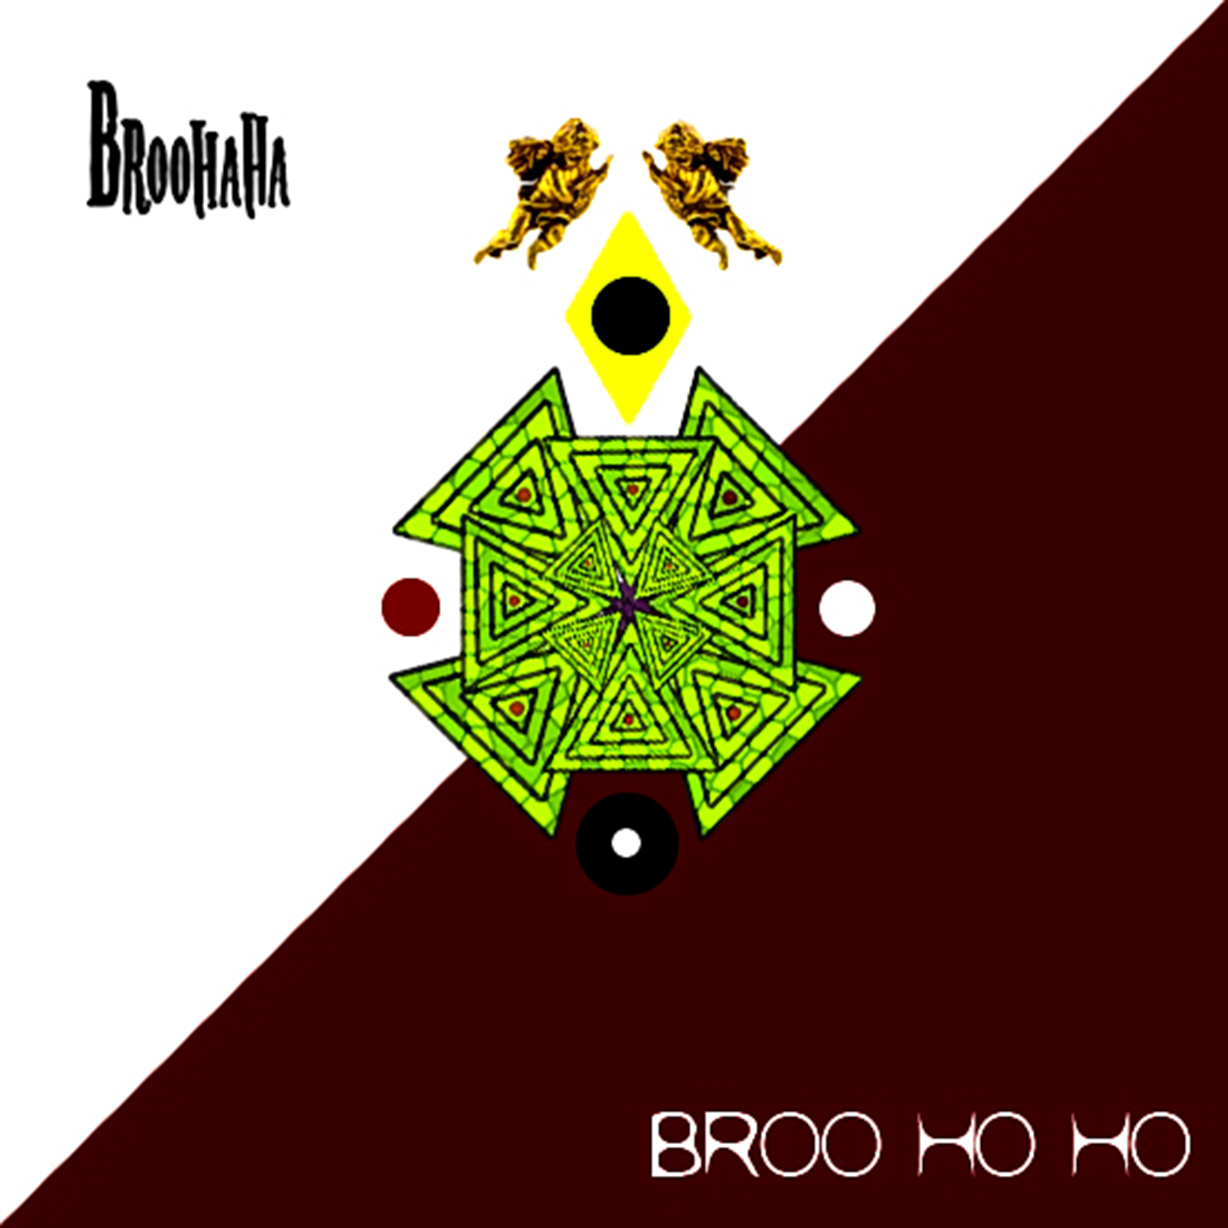 Broohaha - Broo Ho Ho